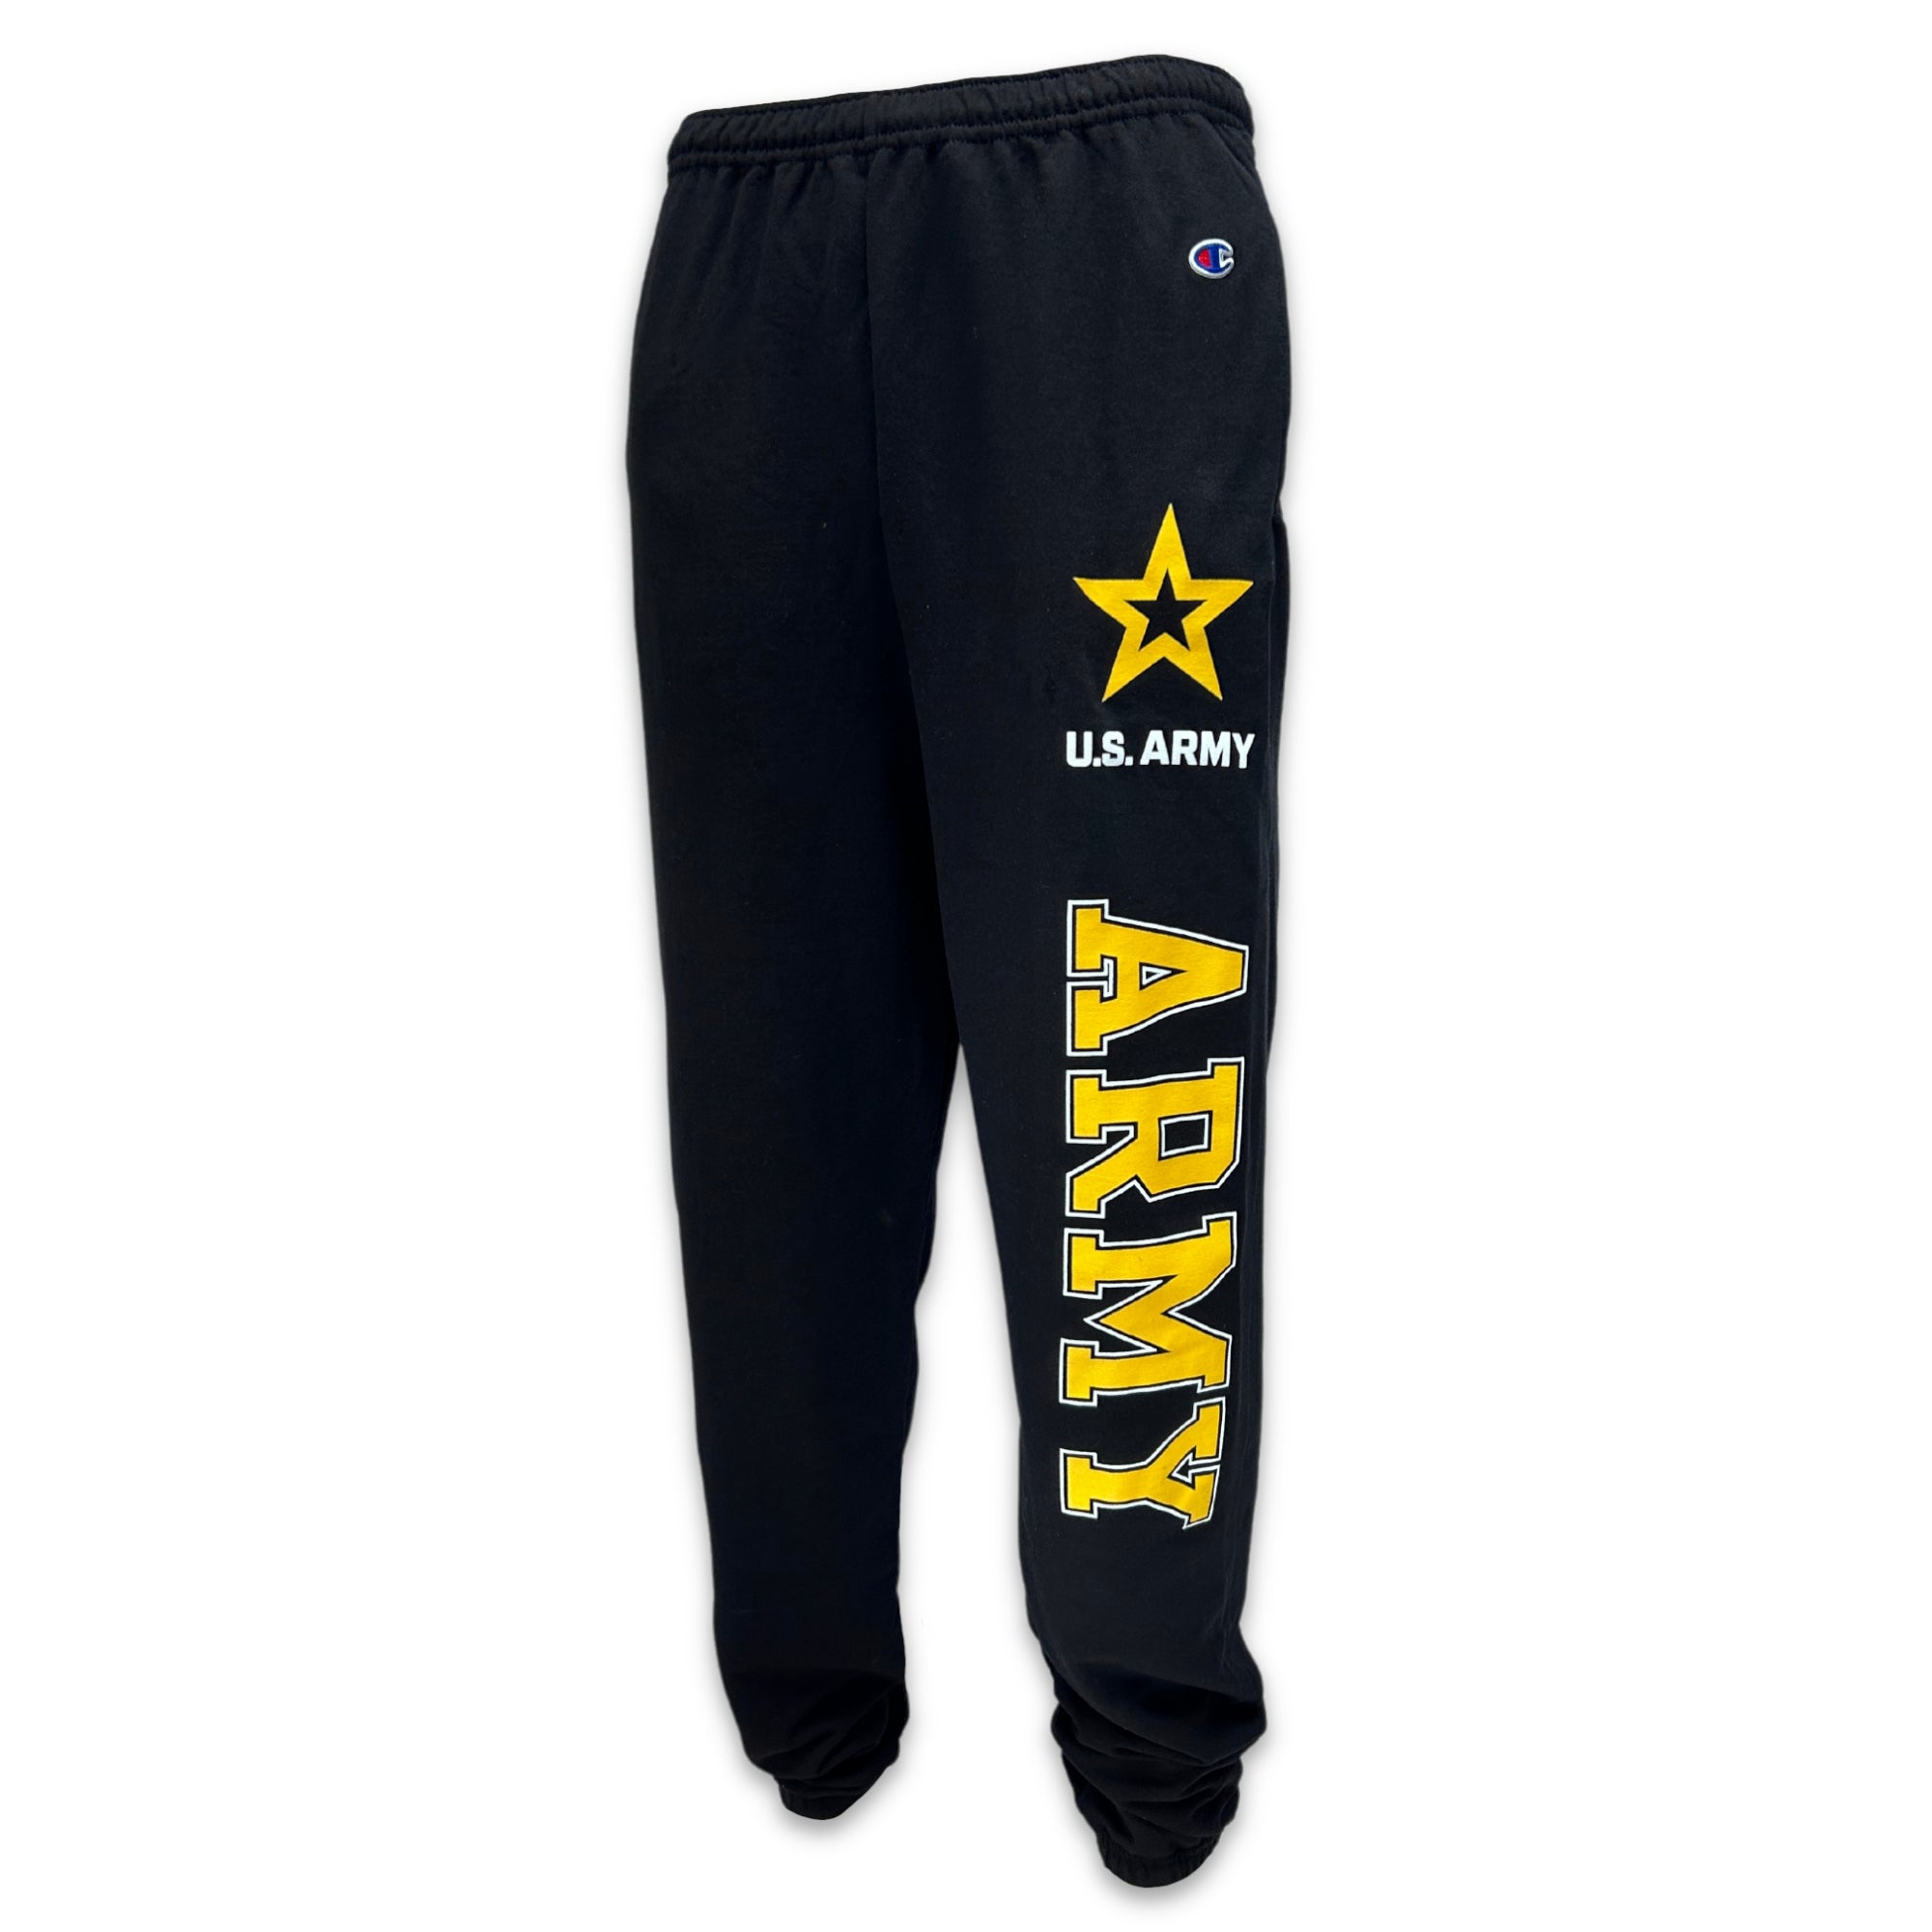 U.S. Army Pants & Shorts: Army Champion Fleece Banded Sweatpants